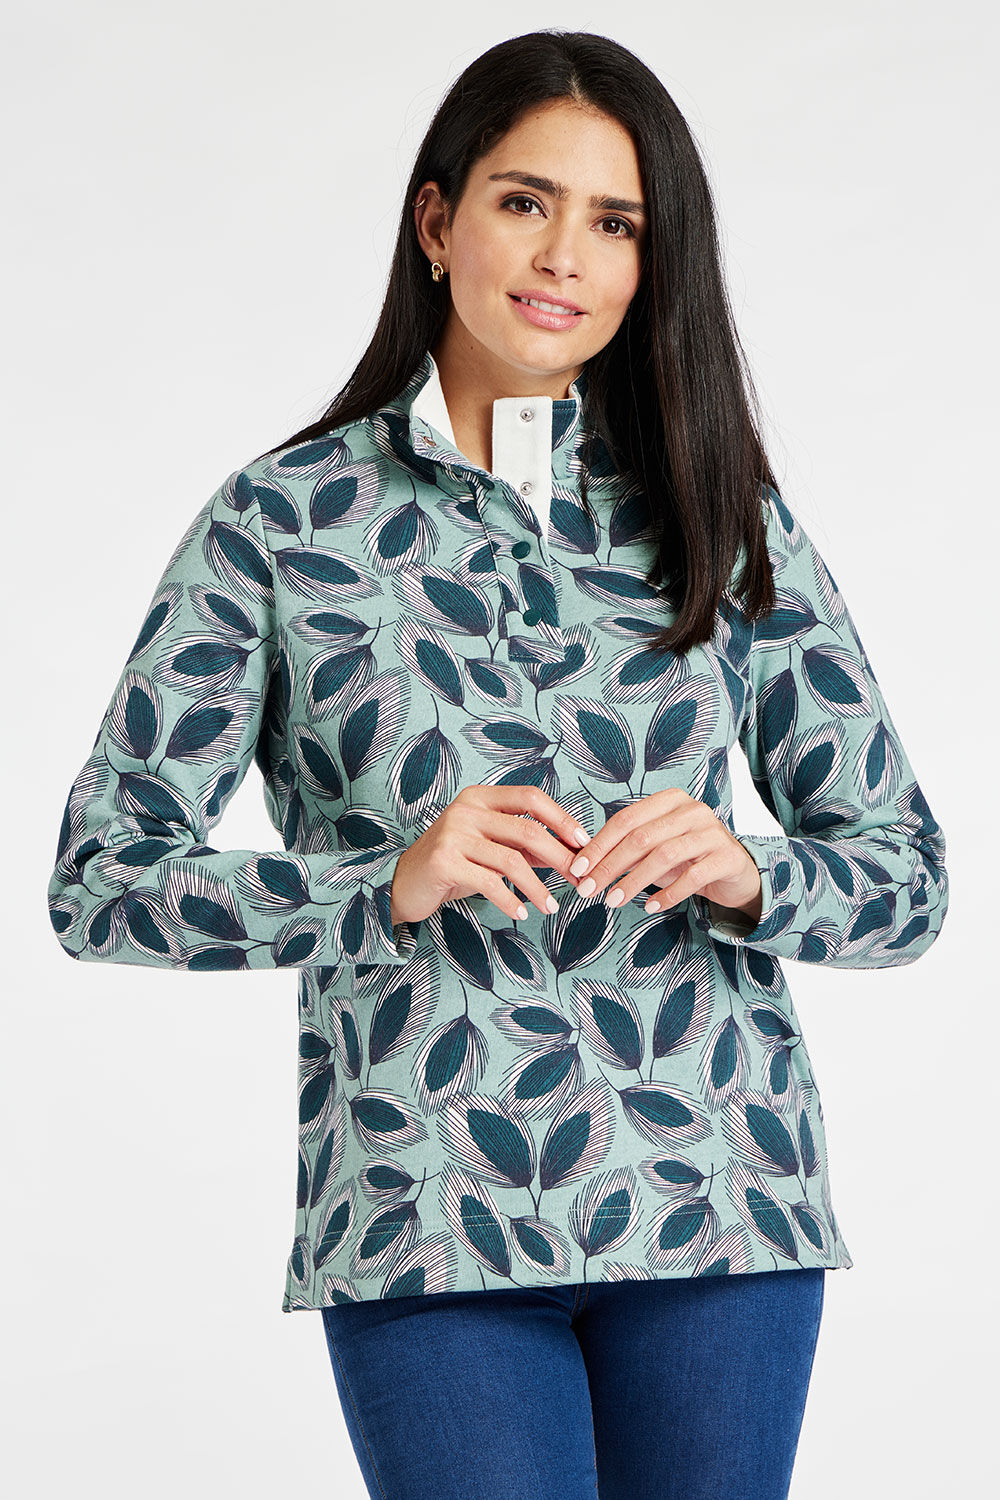 Bonmarche Women’s Green and White Cotton Leaf Print Long Sleeve Funnel Neck Sweatshirt, Size: 20